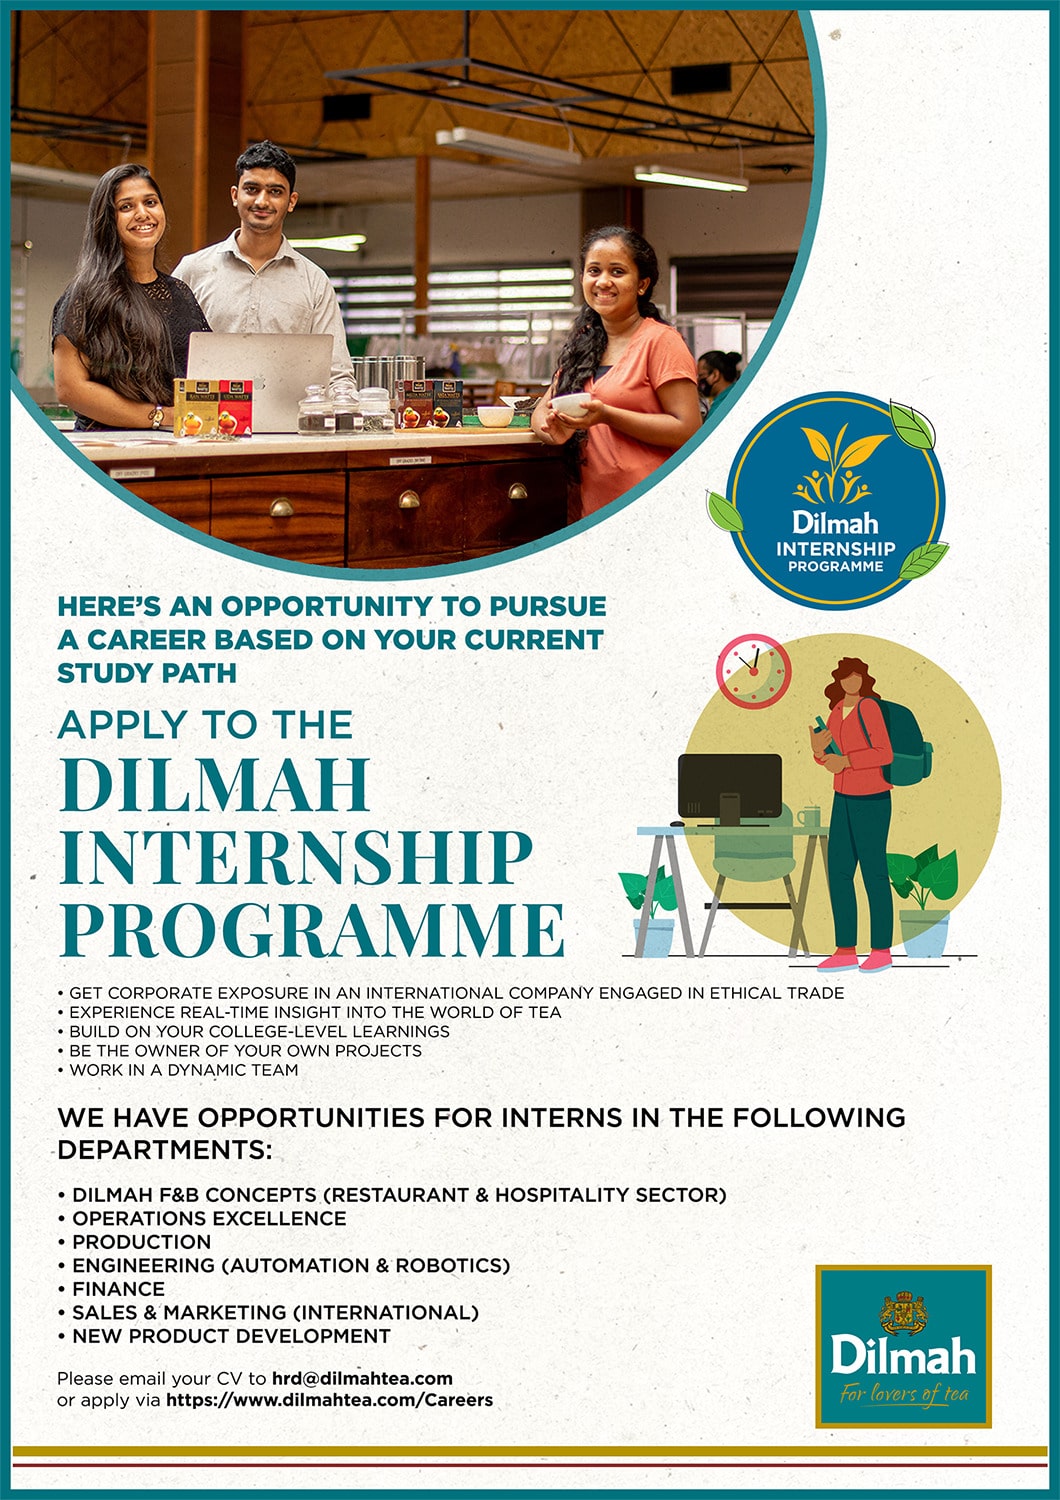 Internship (New Product Development) Vacancies - Dilmah Tea Company Jobs Details